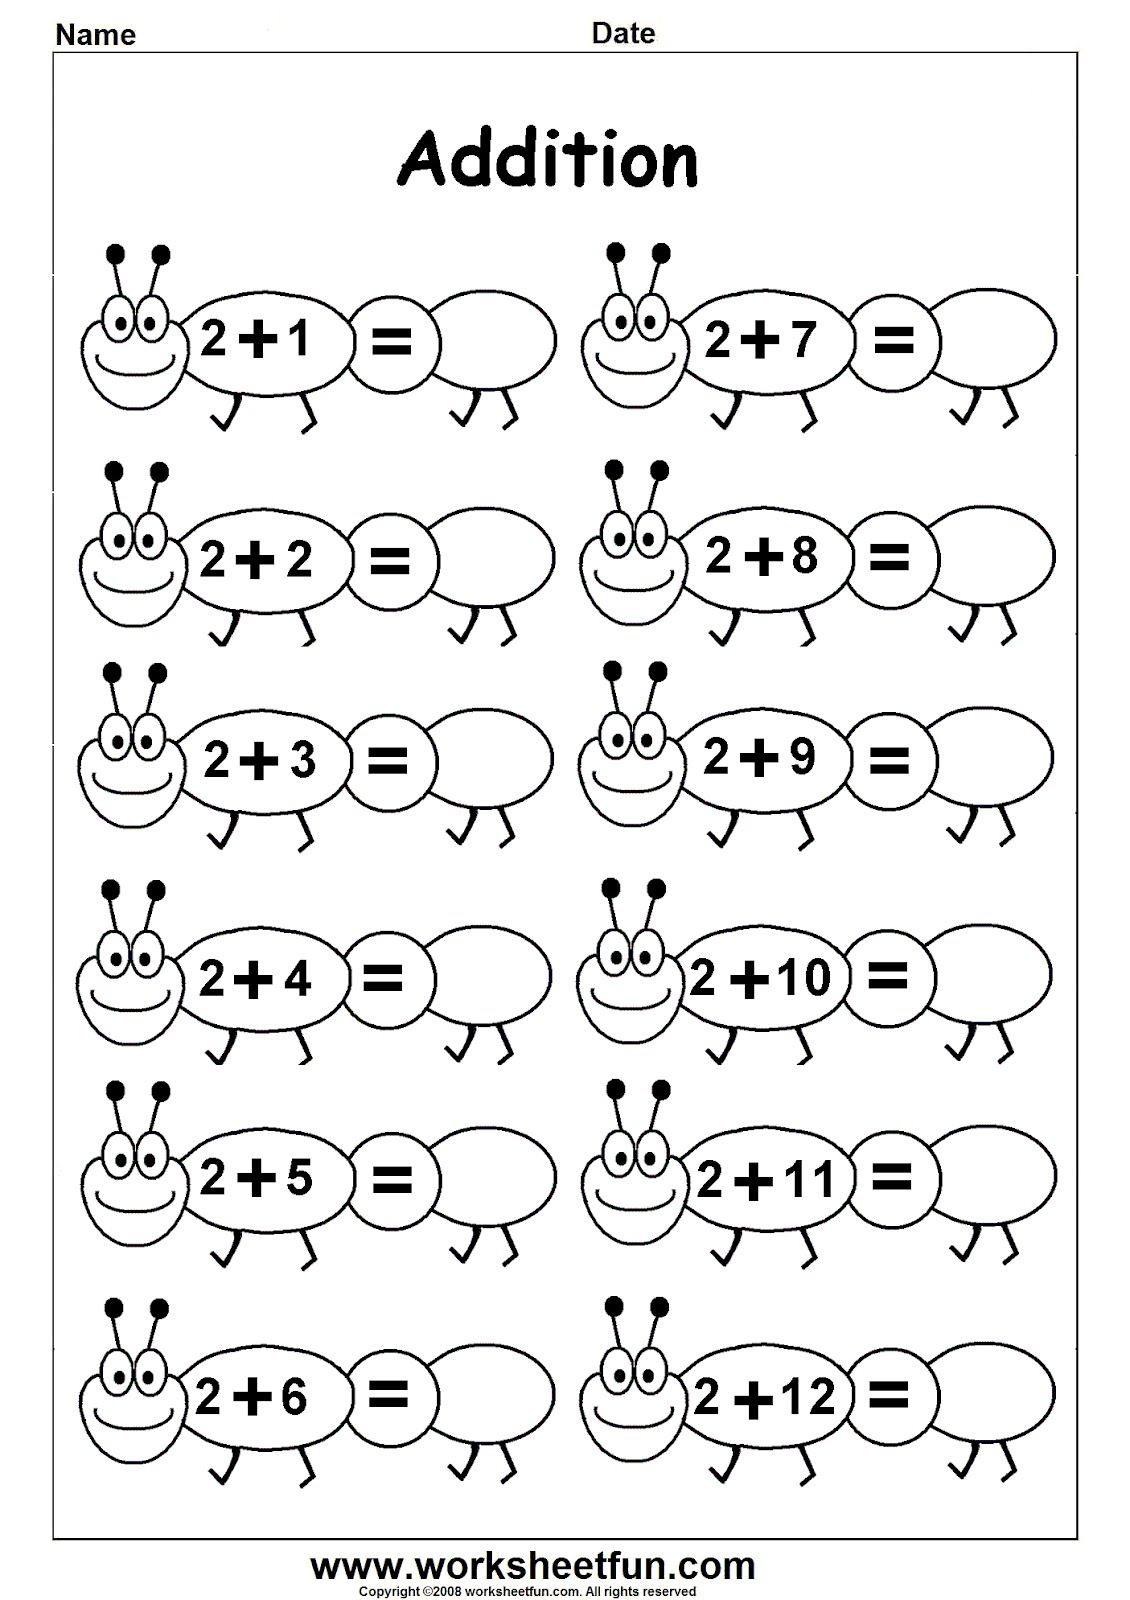 Worksheetfun - Free Printable Worksheets | Ethan School | Printable Math Worksheets For Toddlers